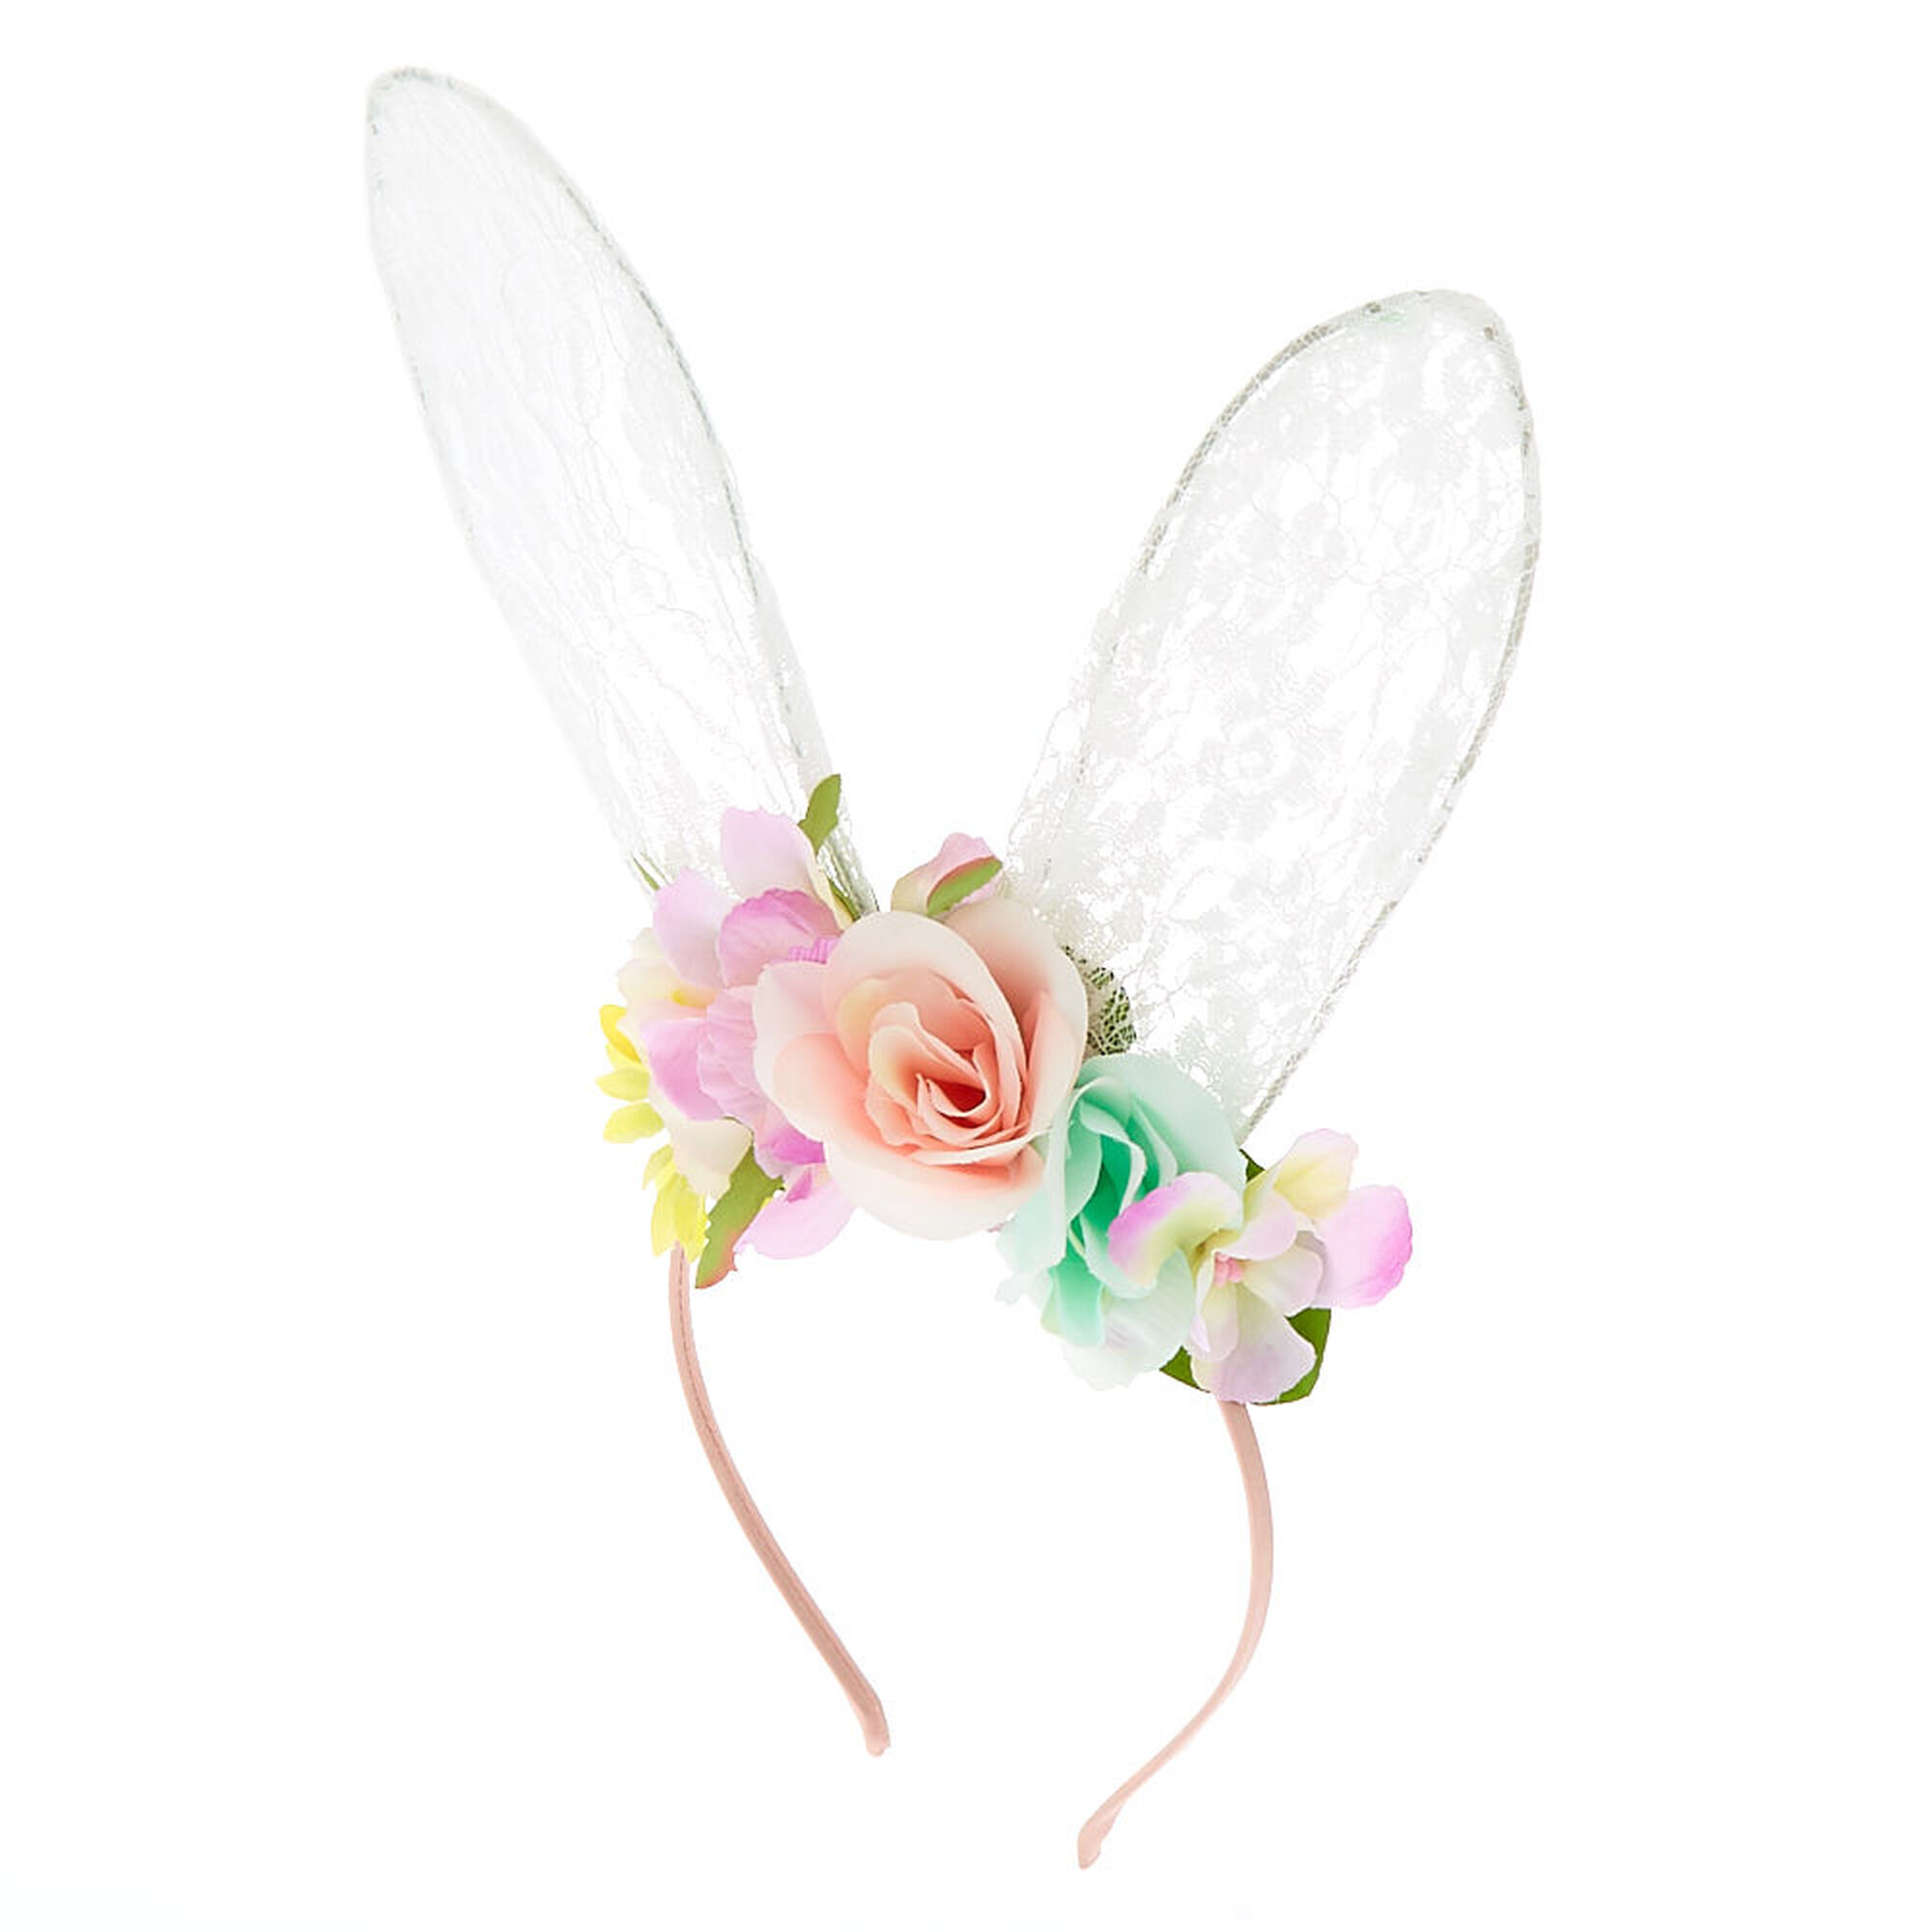 Lace Flower Bunny Ears Headband Claire S